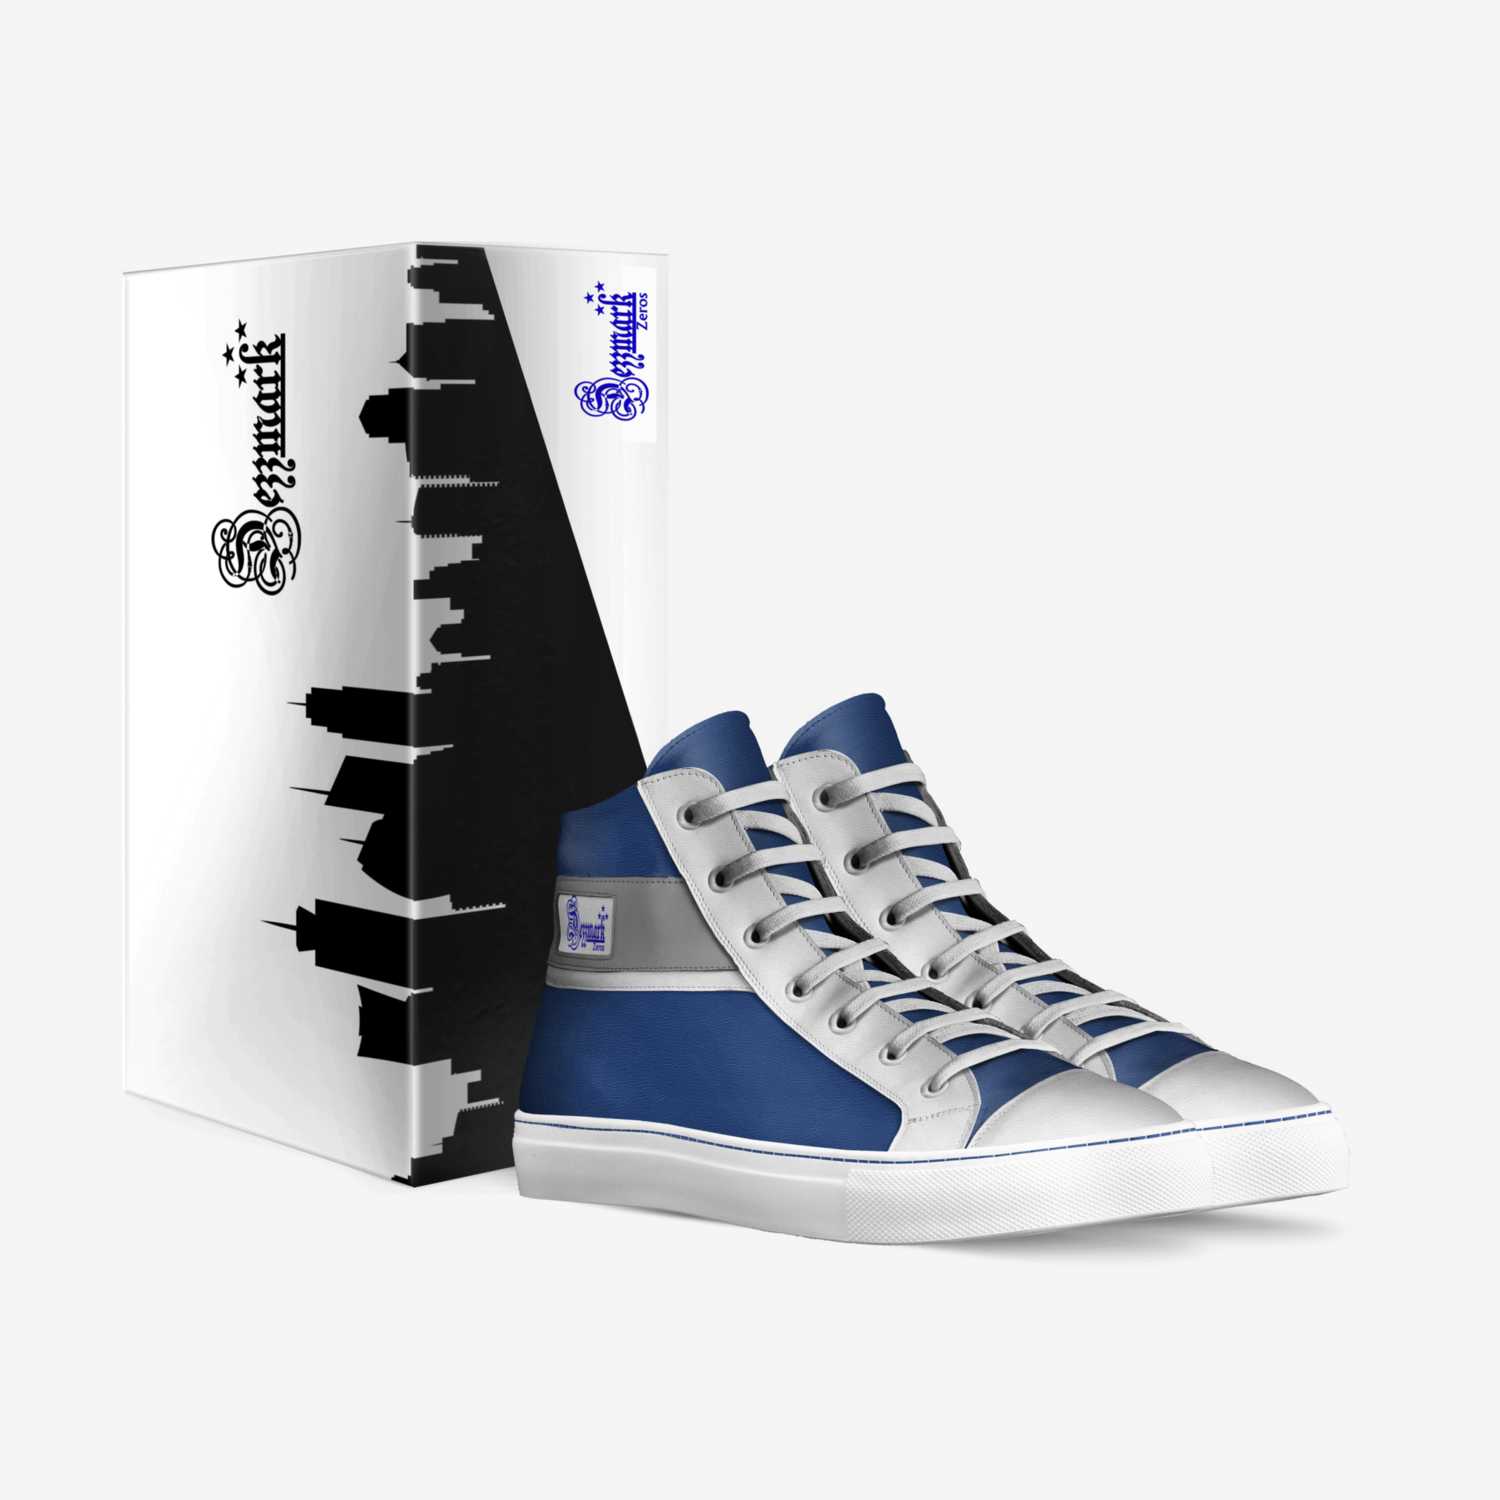 Dezzmark - Zeros custom made in Italy shoes by Mark Darocha | Box view